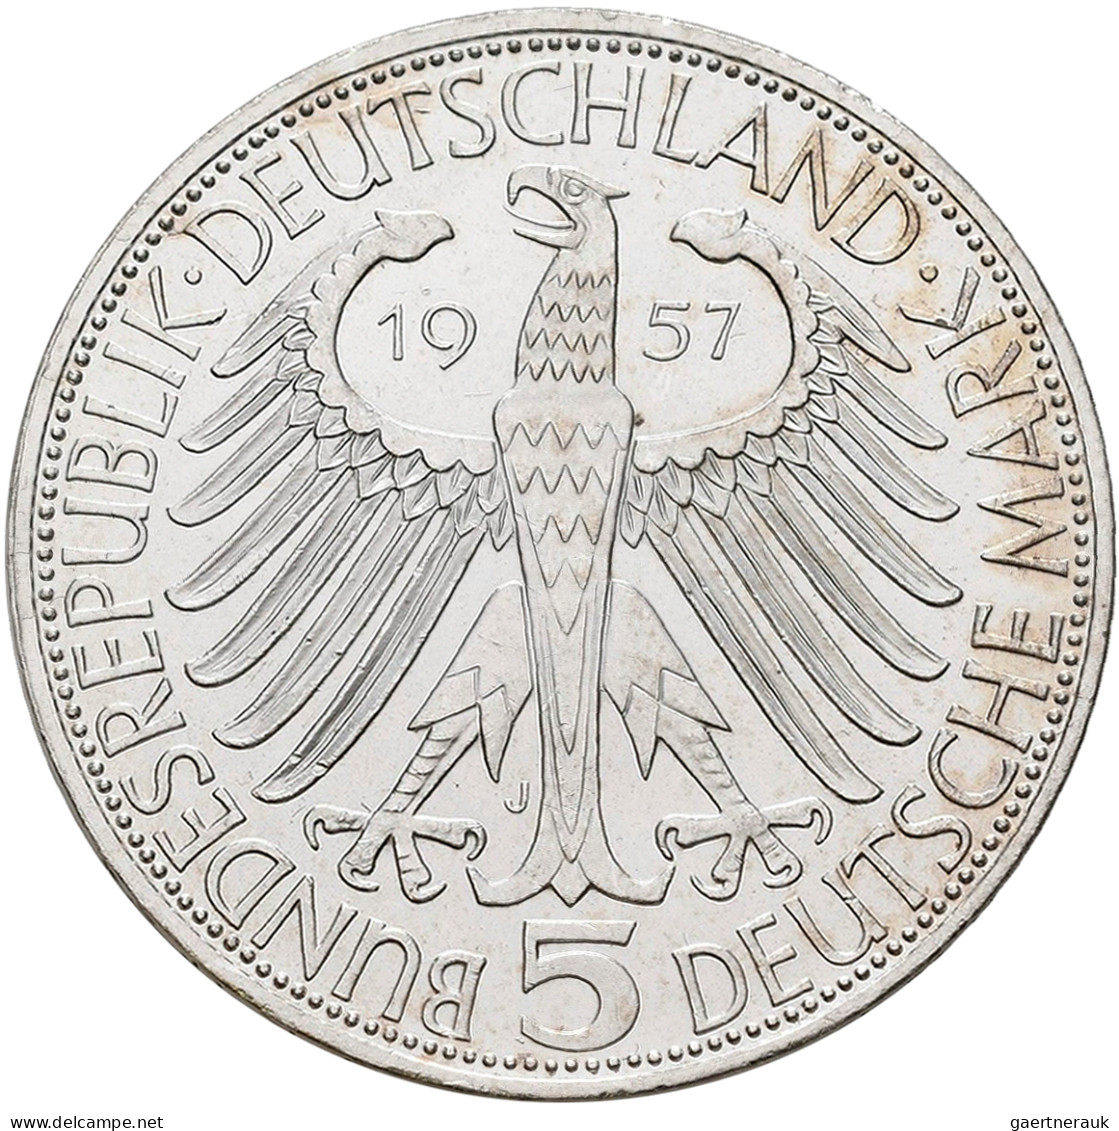 Bundesrepublik Deutschland 1948-2001: Edle Holzkassette mit 43 x 5 DM Gedenkmünz